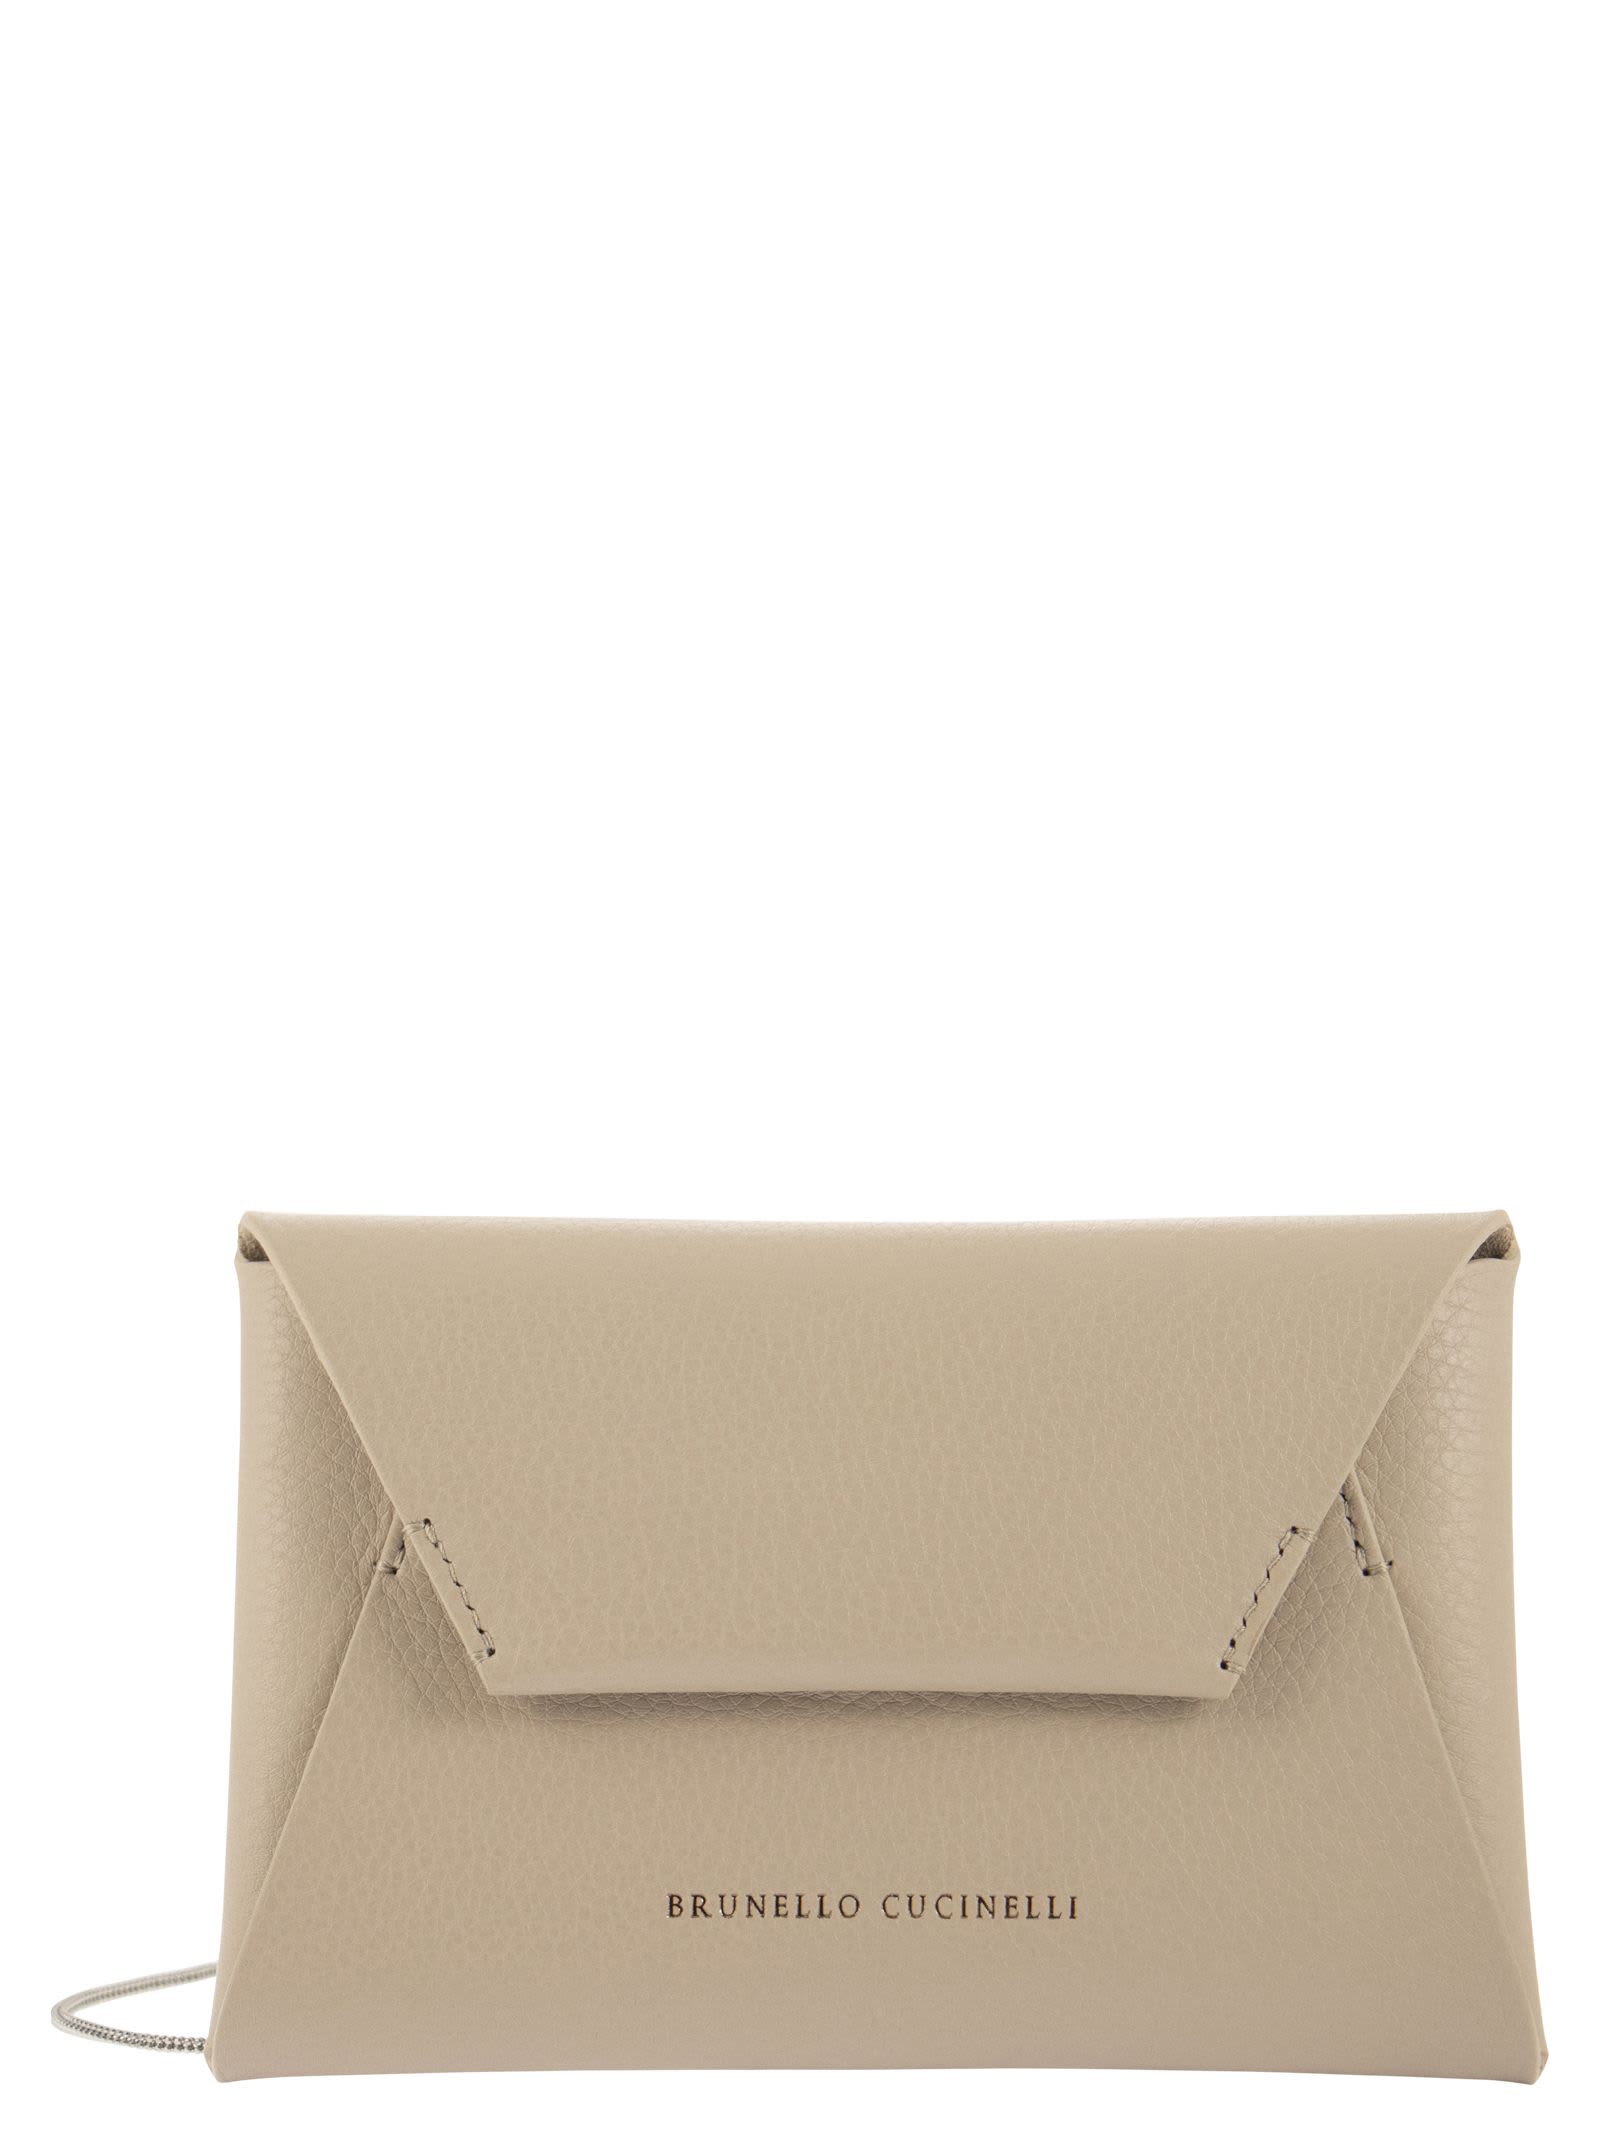 Brunello Cucinelli Calfskin Texture Envelope Bag With precious Strap